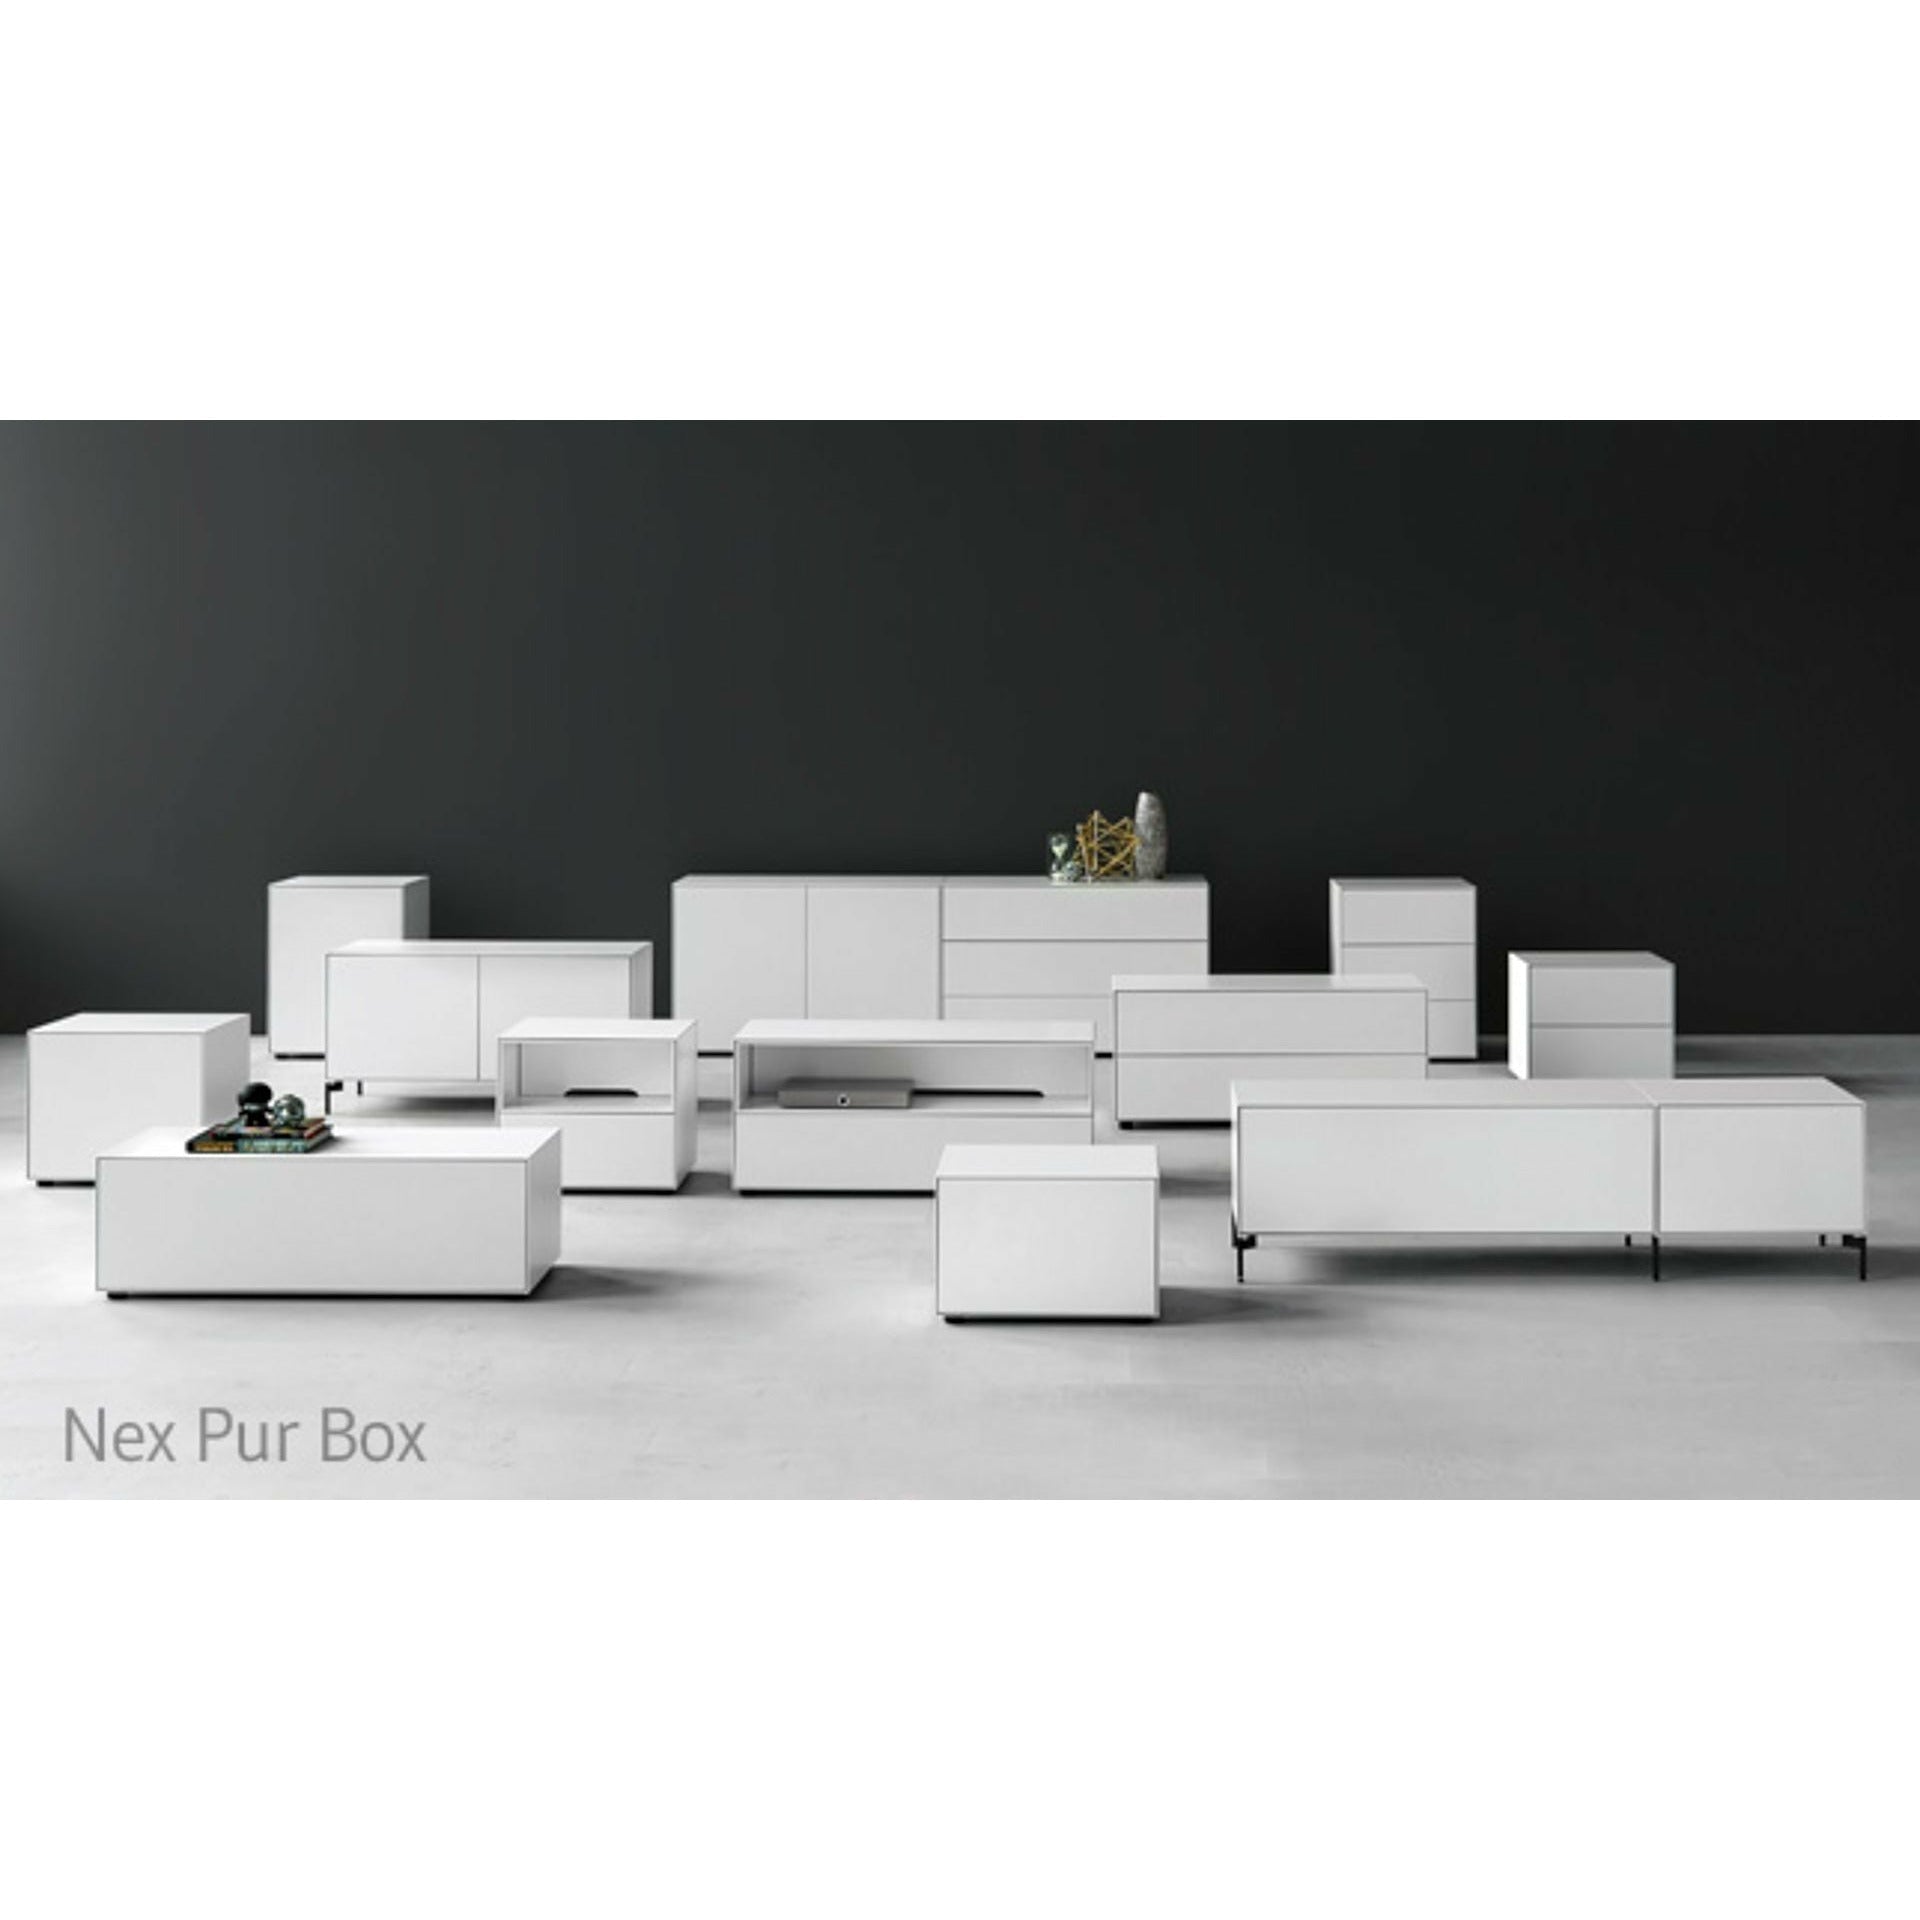 Piiure nex pur box hx w 50x120 cm, 1 police